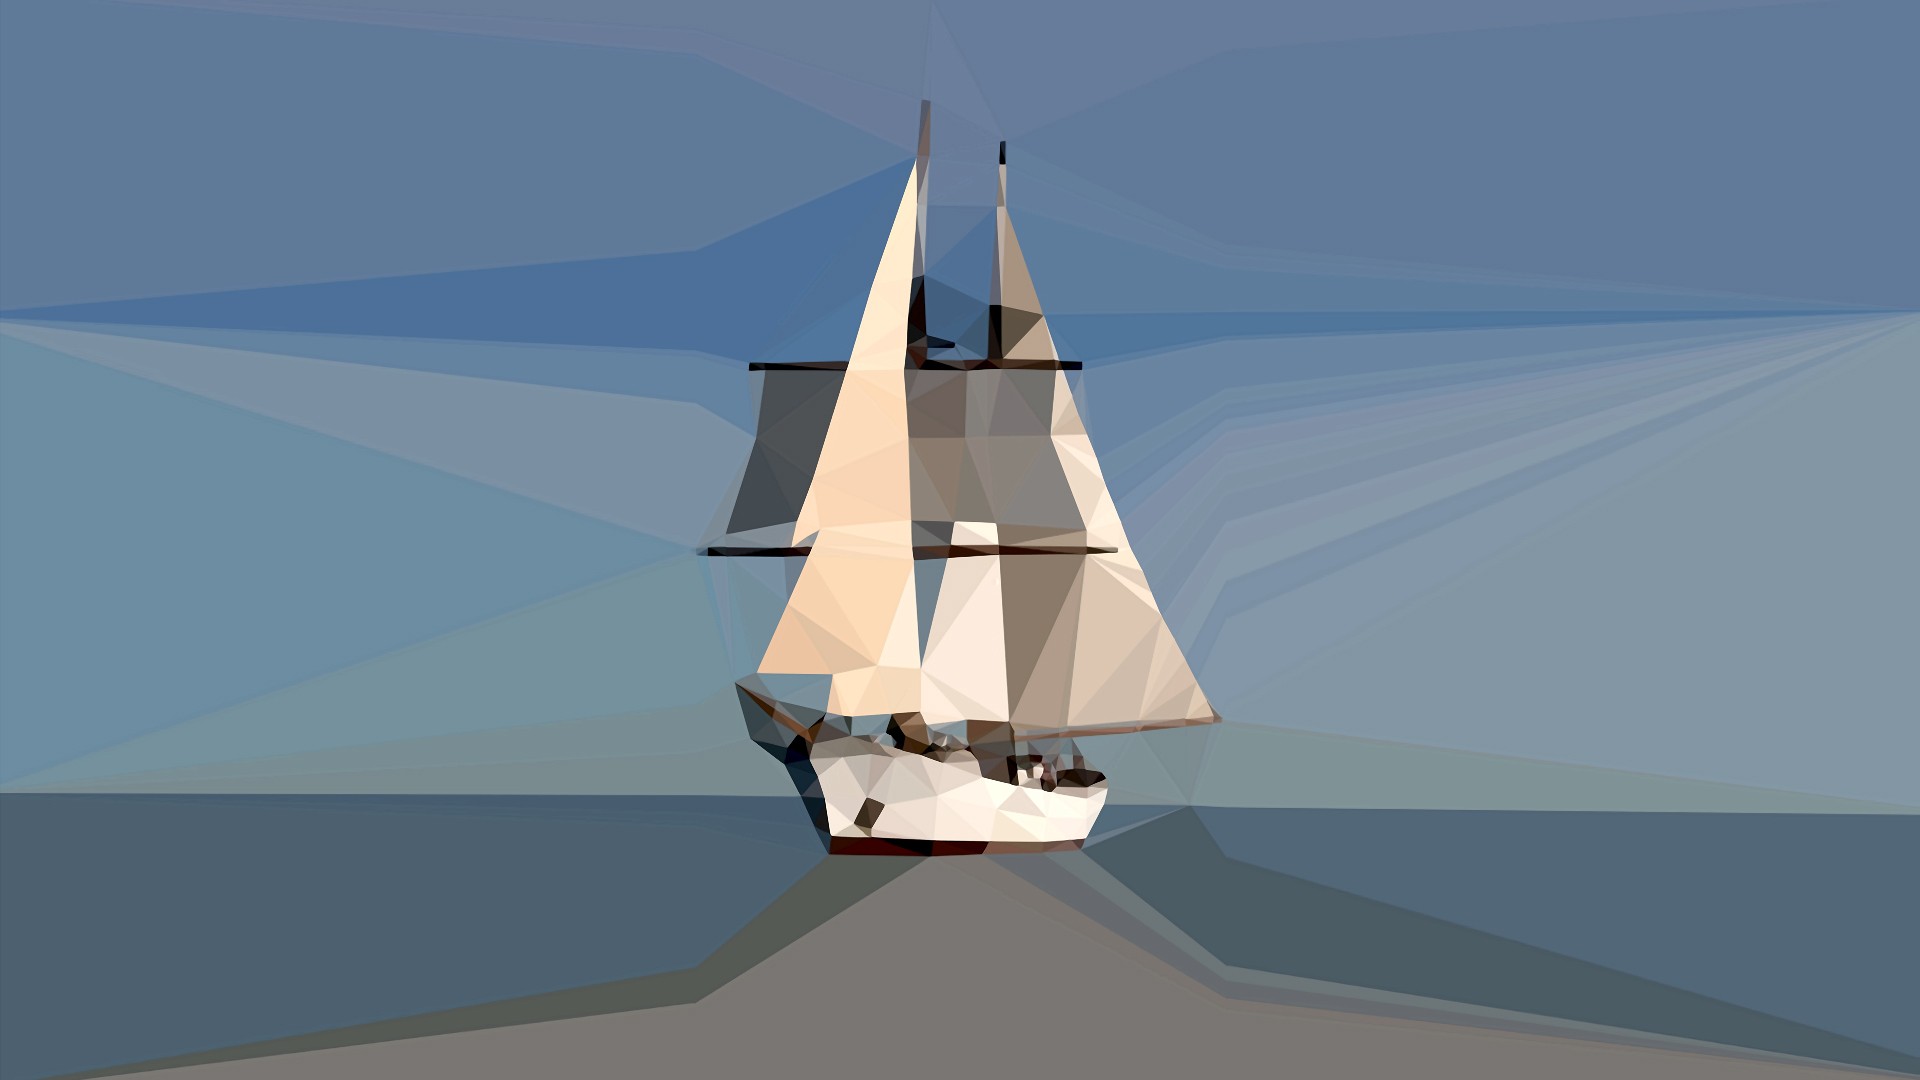 General 1920x1080 minimalism blue horizon low poly sailing ship digital art sea sky CGI vehicle artwork rigging (ship)